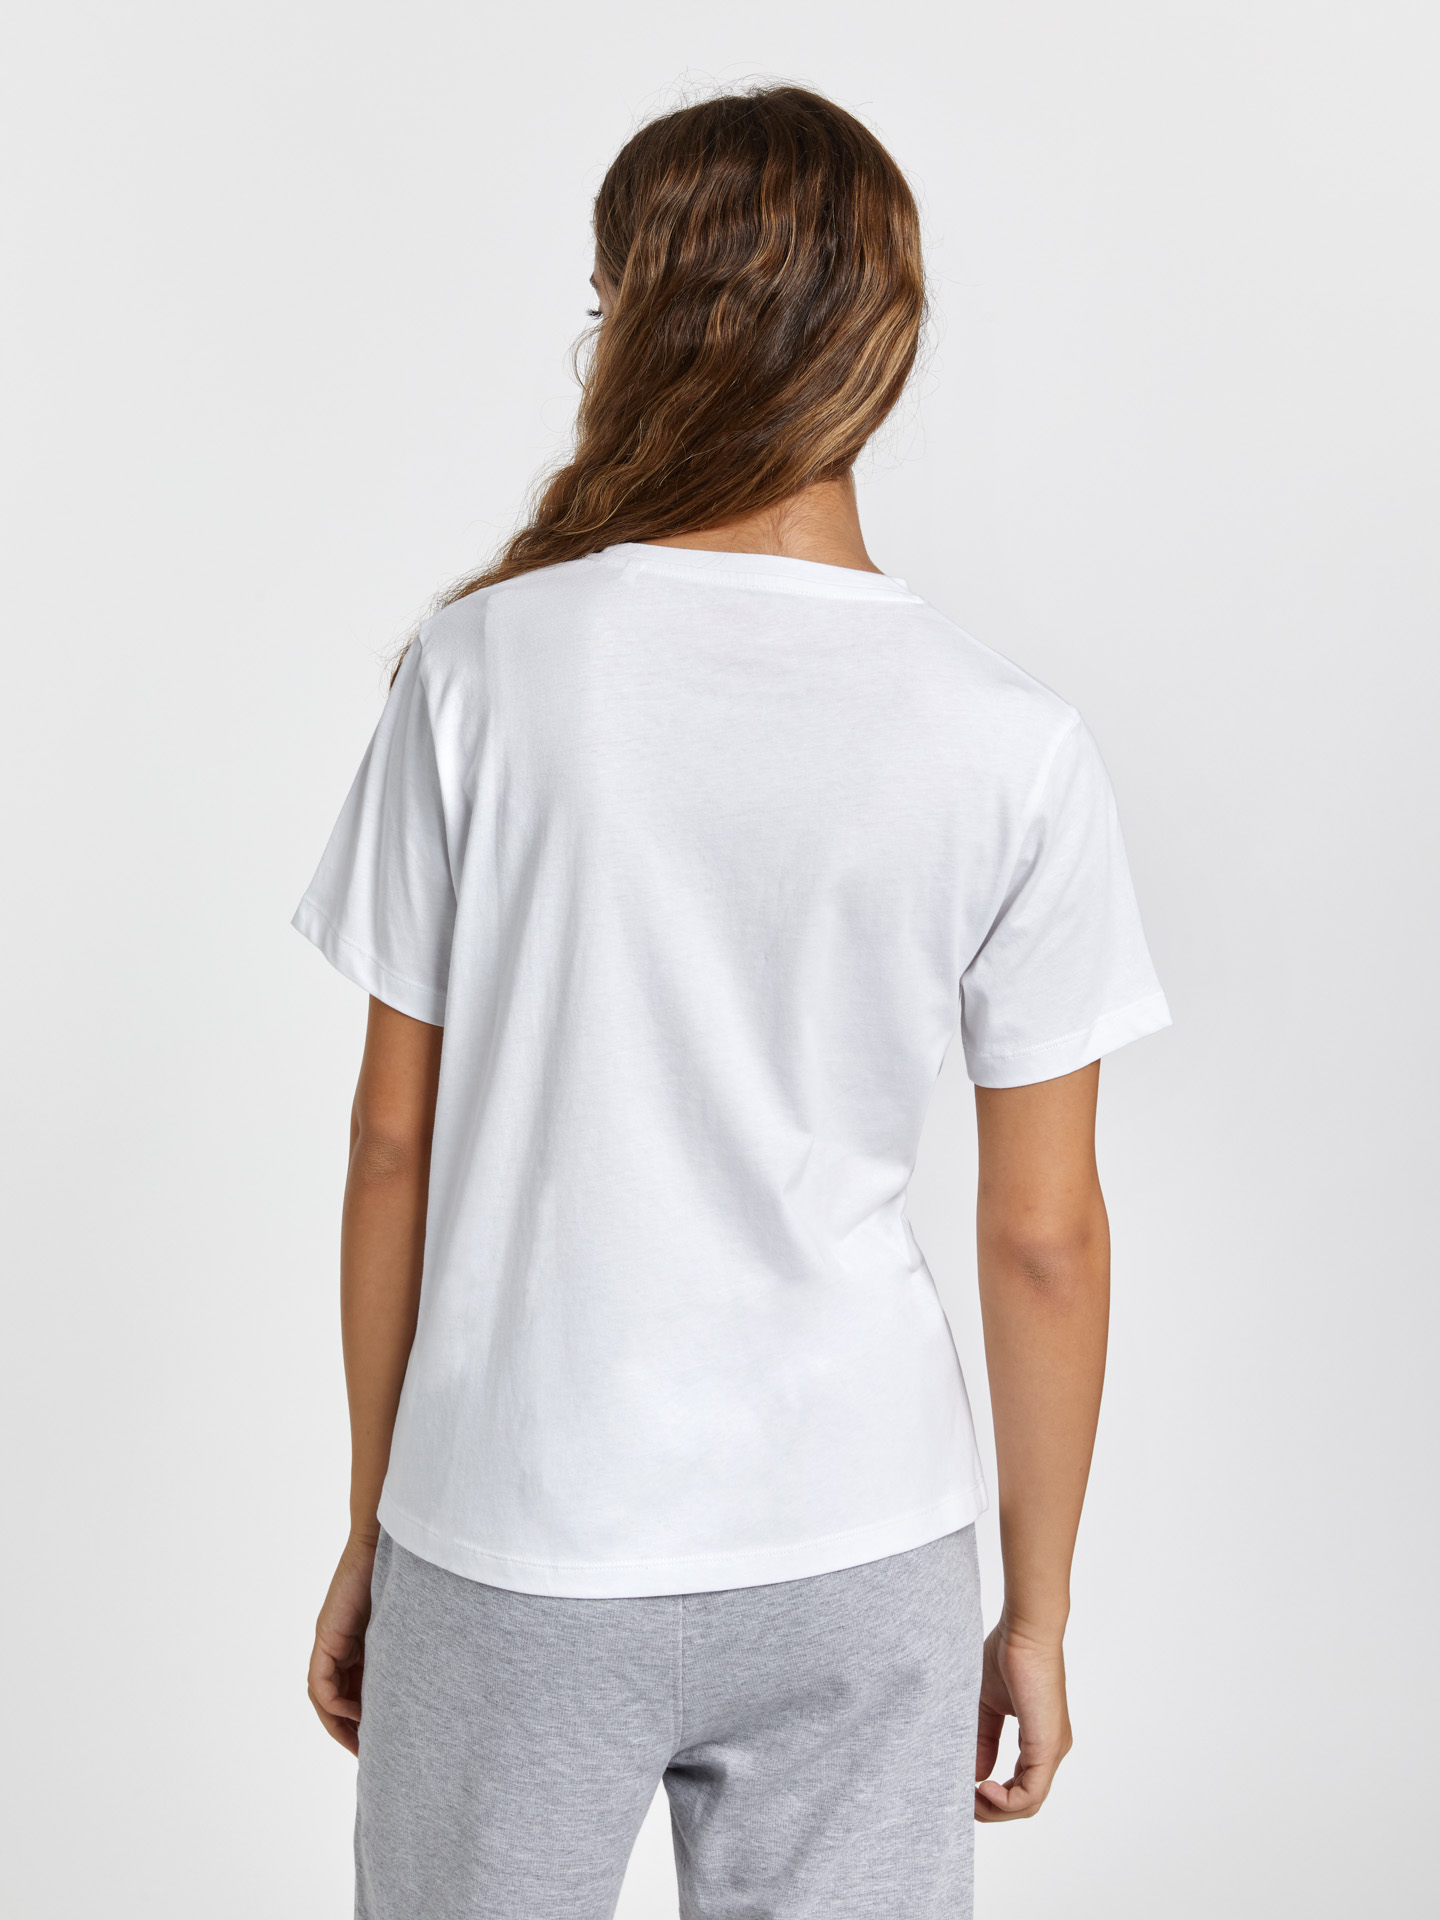 T-Shirt Branco Casual Mulher